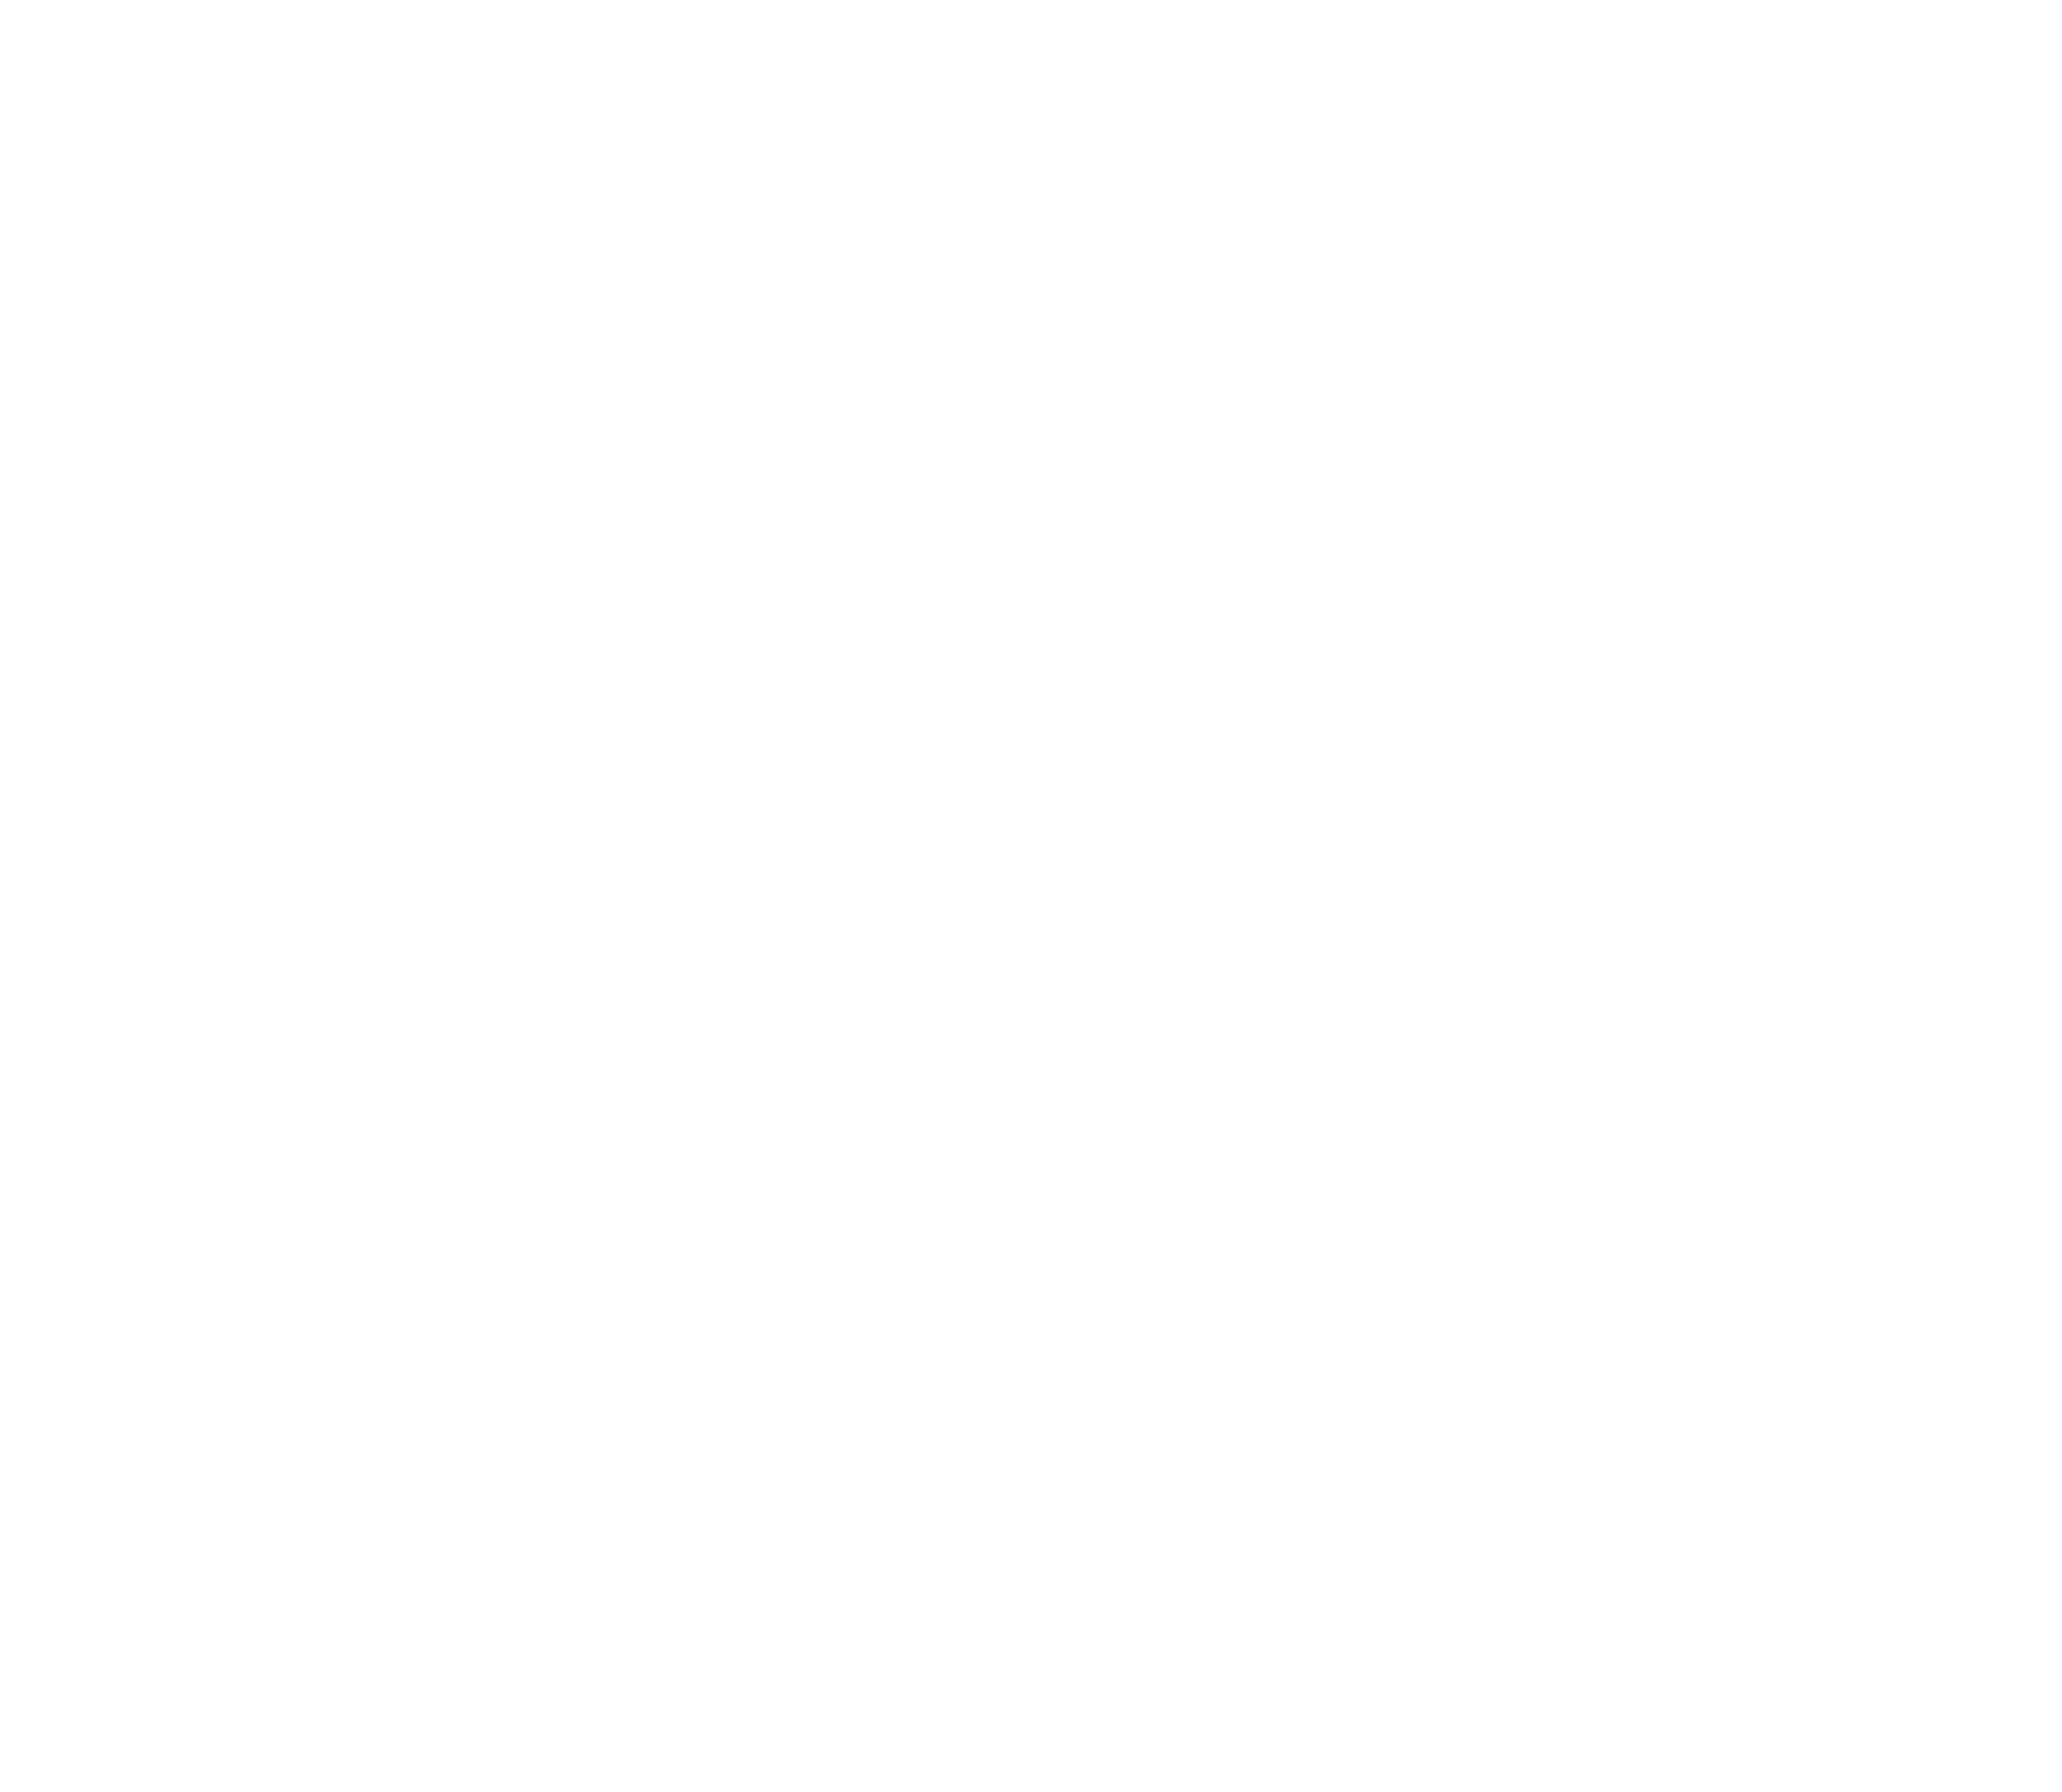 http://www.reslogproject.org/en/wp-content/uploads/2022/08/res1-01-01-01.png